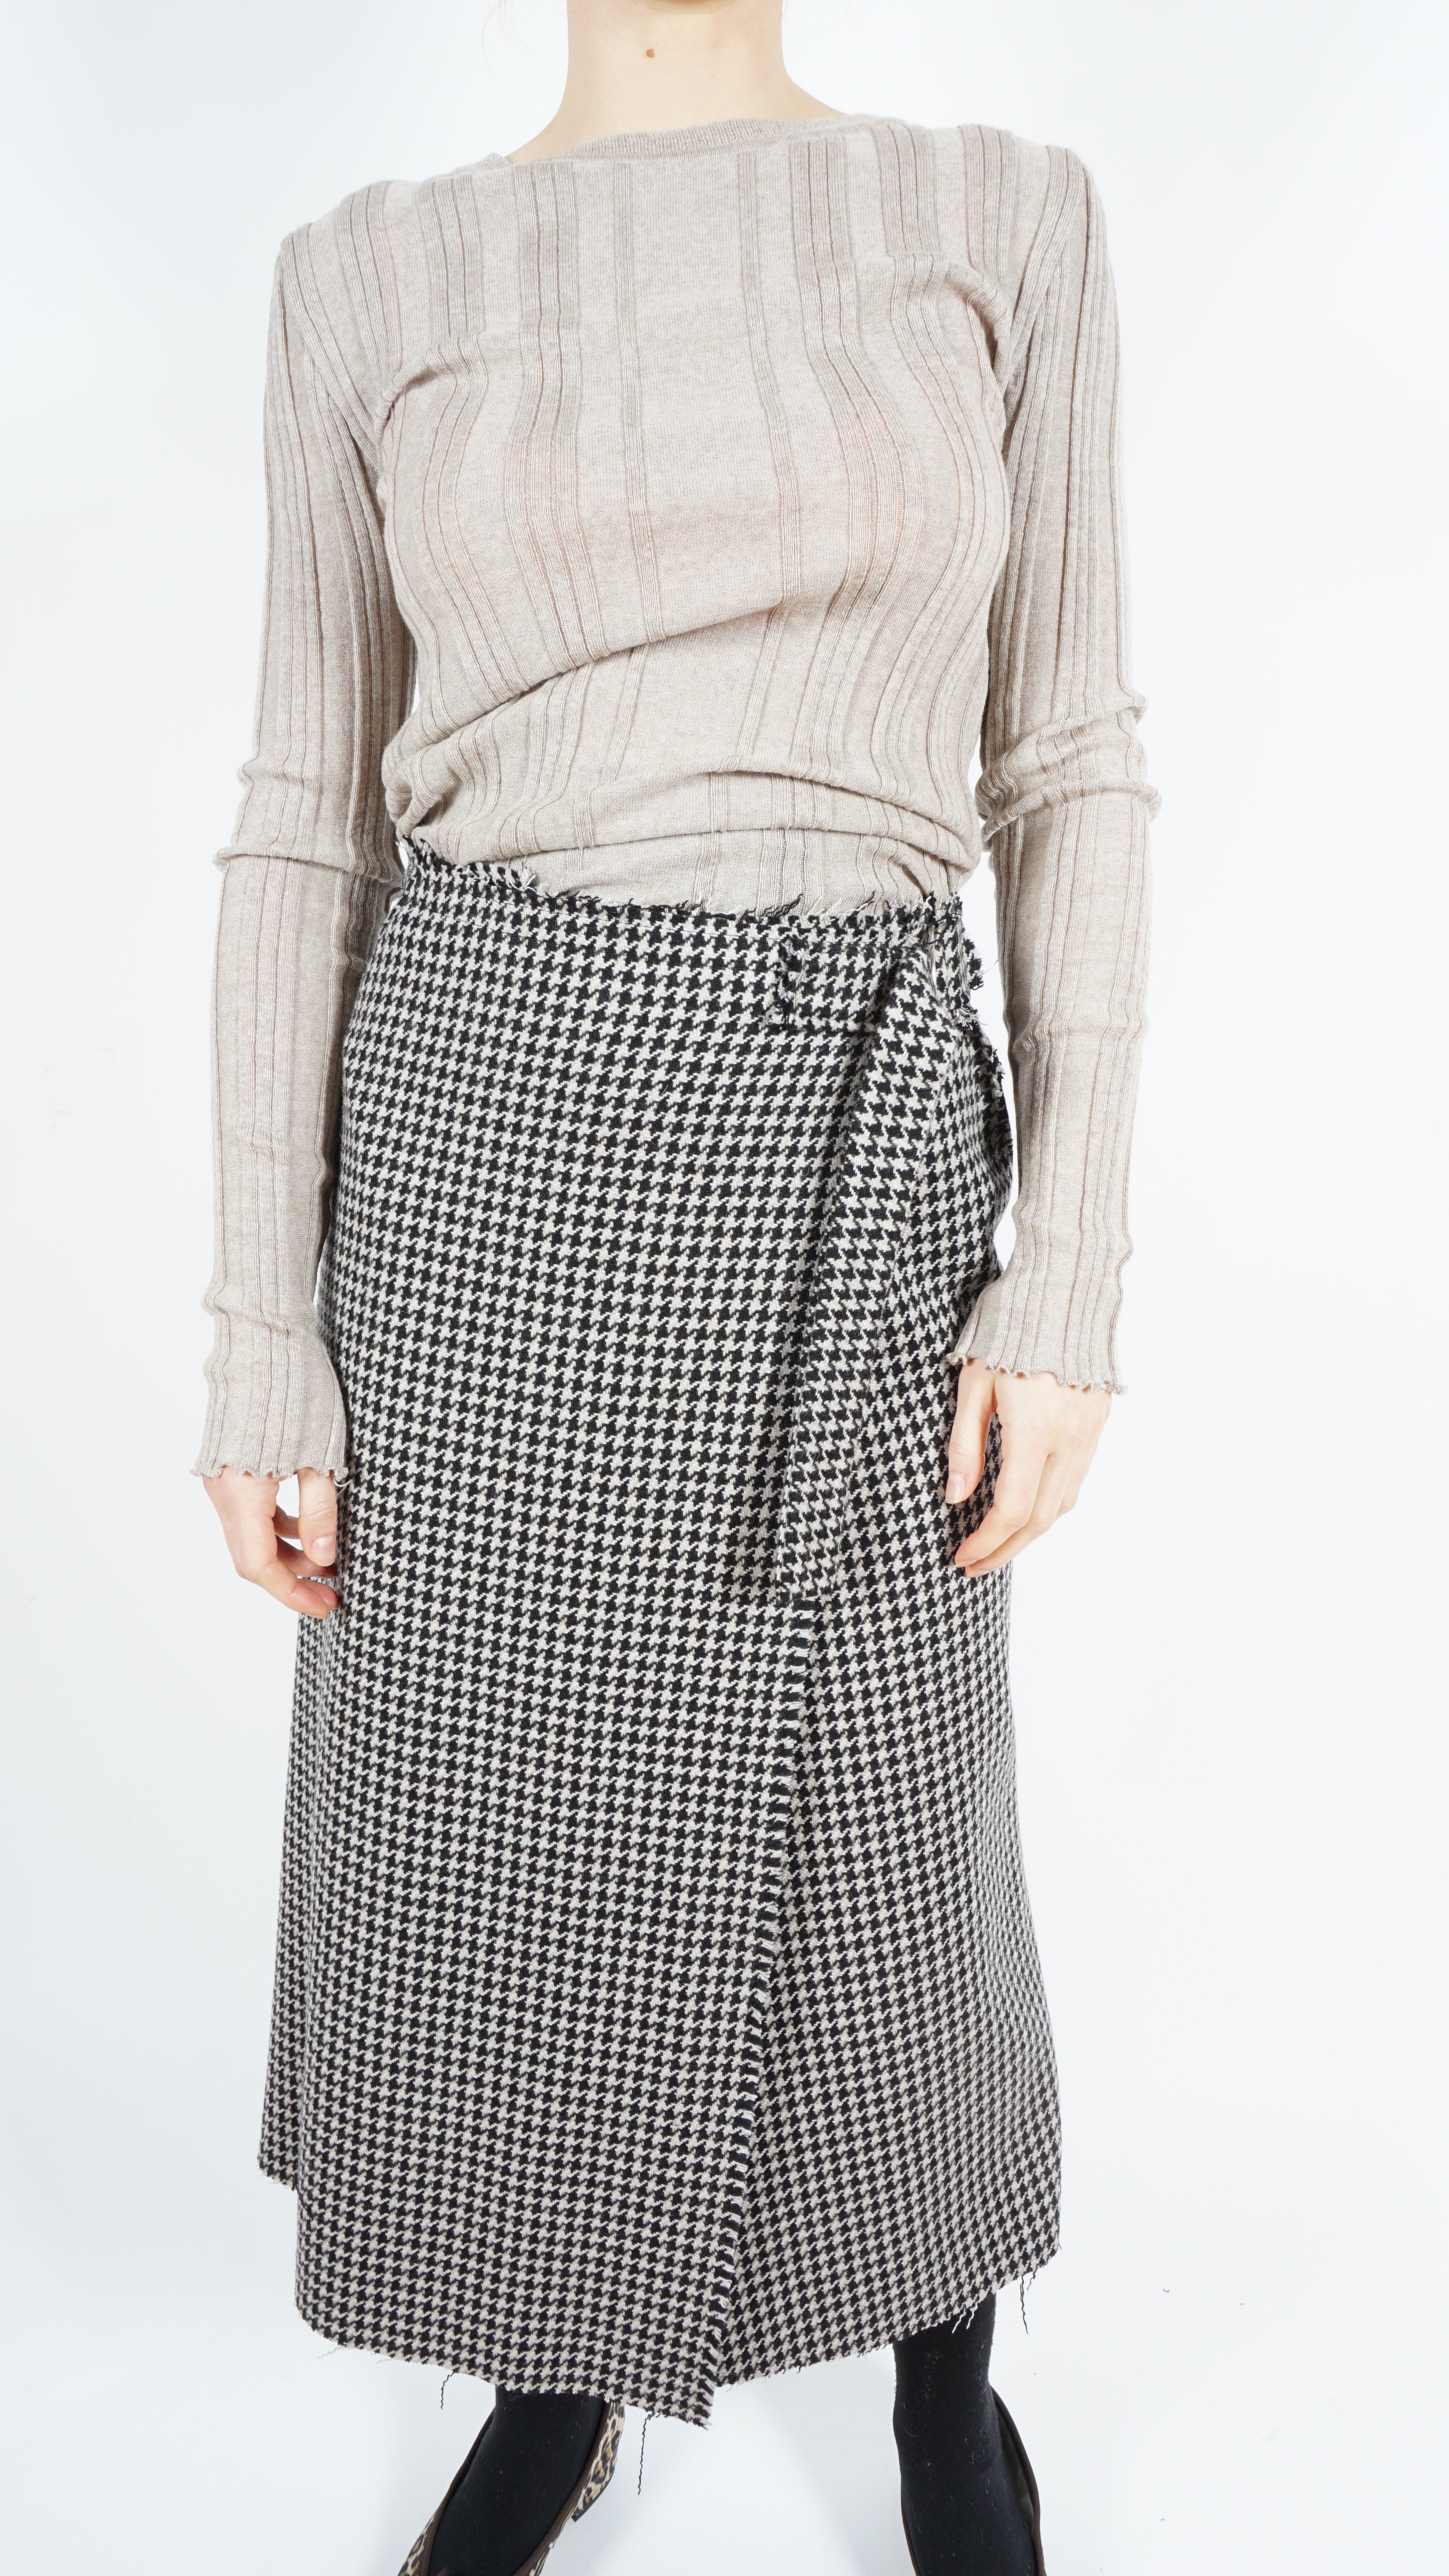 Checkered skirt by Bettina Bakdal